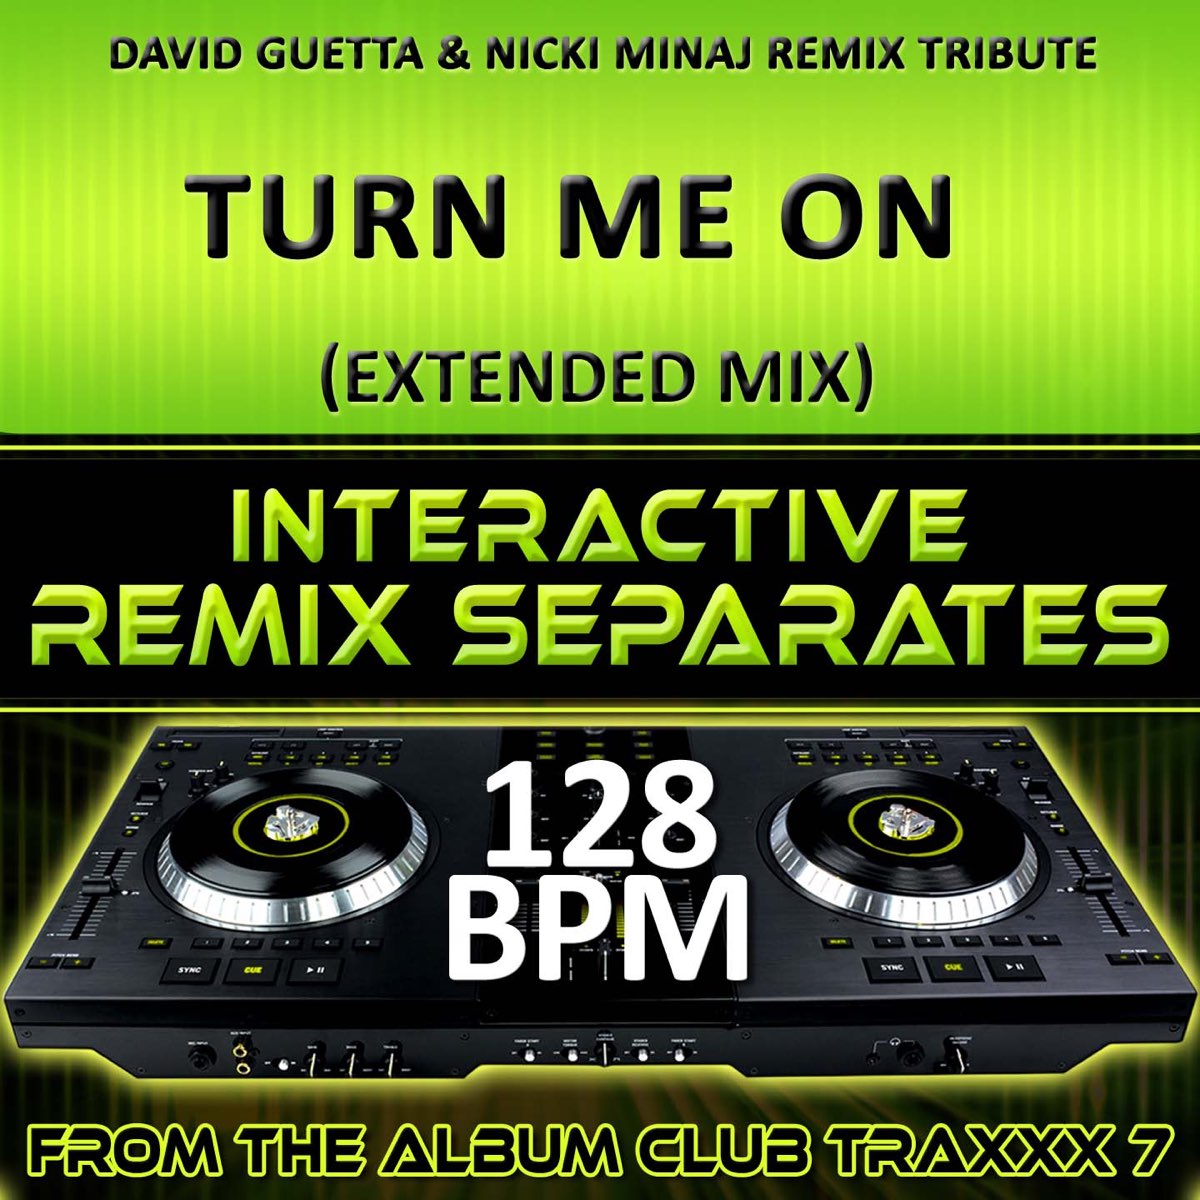 Turn Me On (David Guetta & Nicki Minaj Remix Tribute) [128 BPM Interactive  Remix Separates] - EP - Album by DJ Dizzy - Apple Music